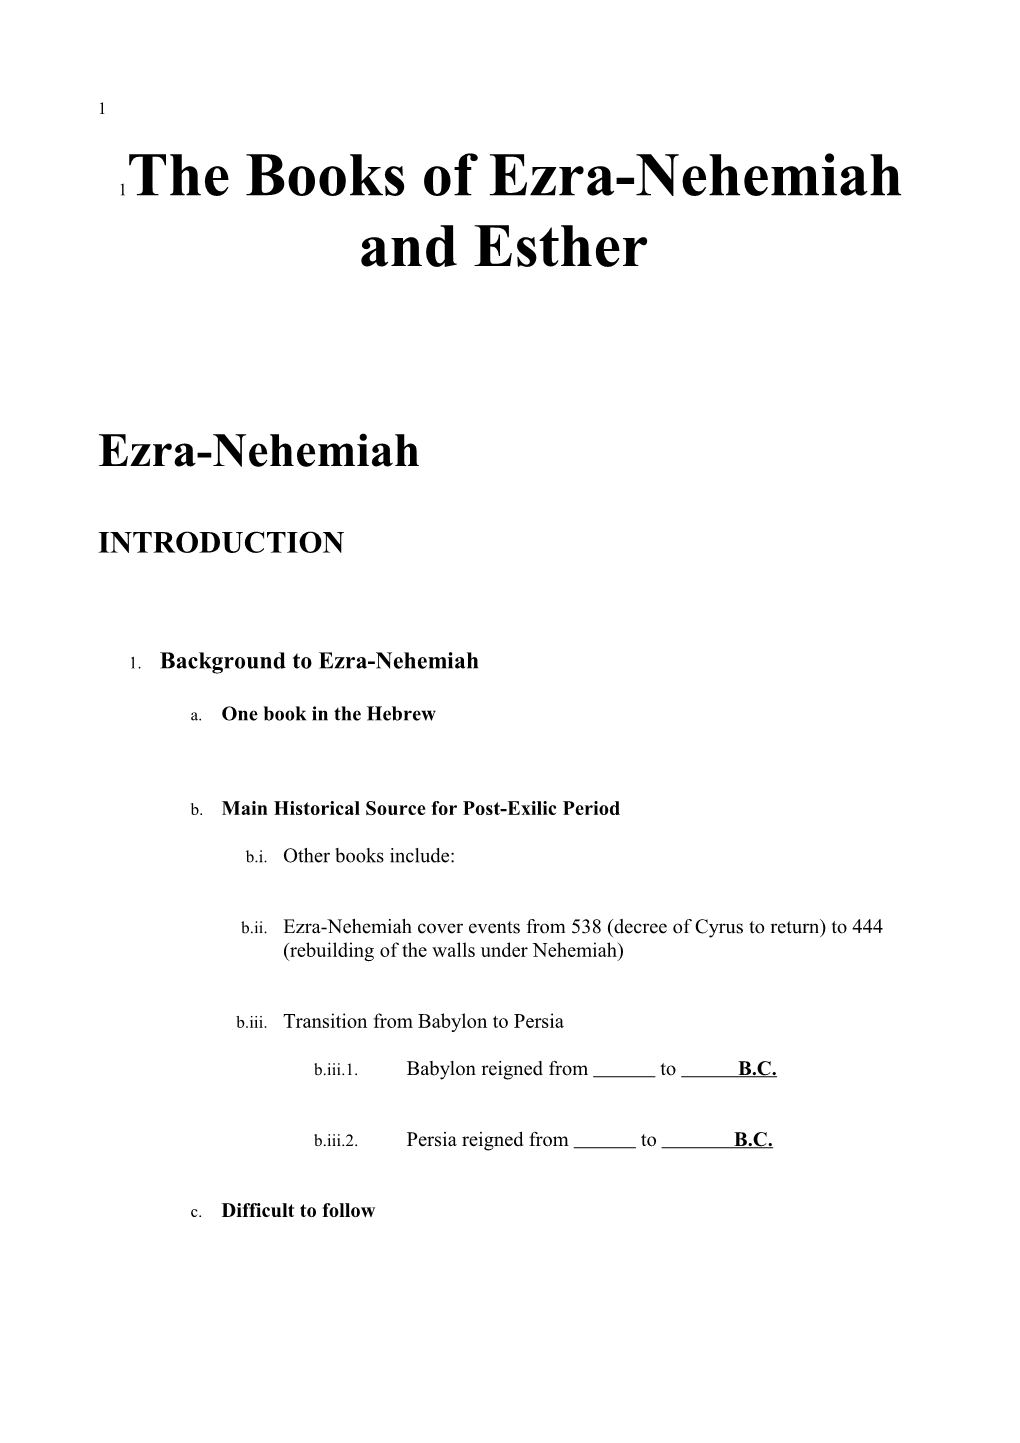 The Books of Ezra-Nehemiah and Esther